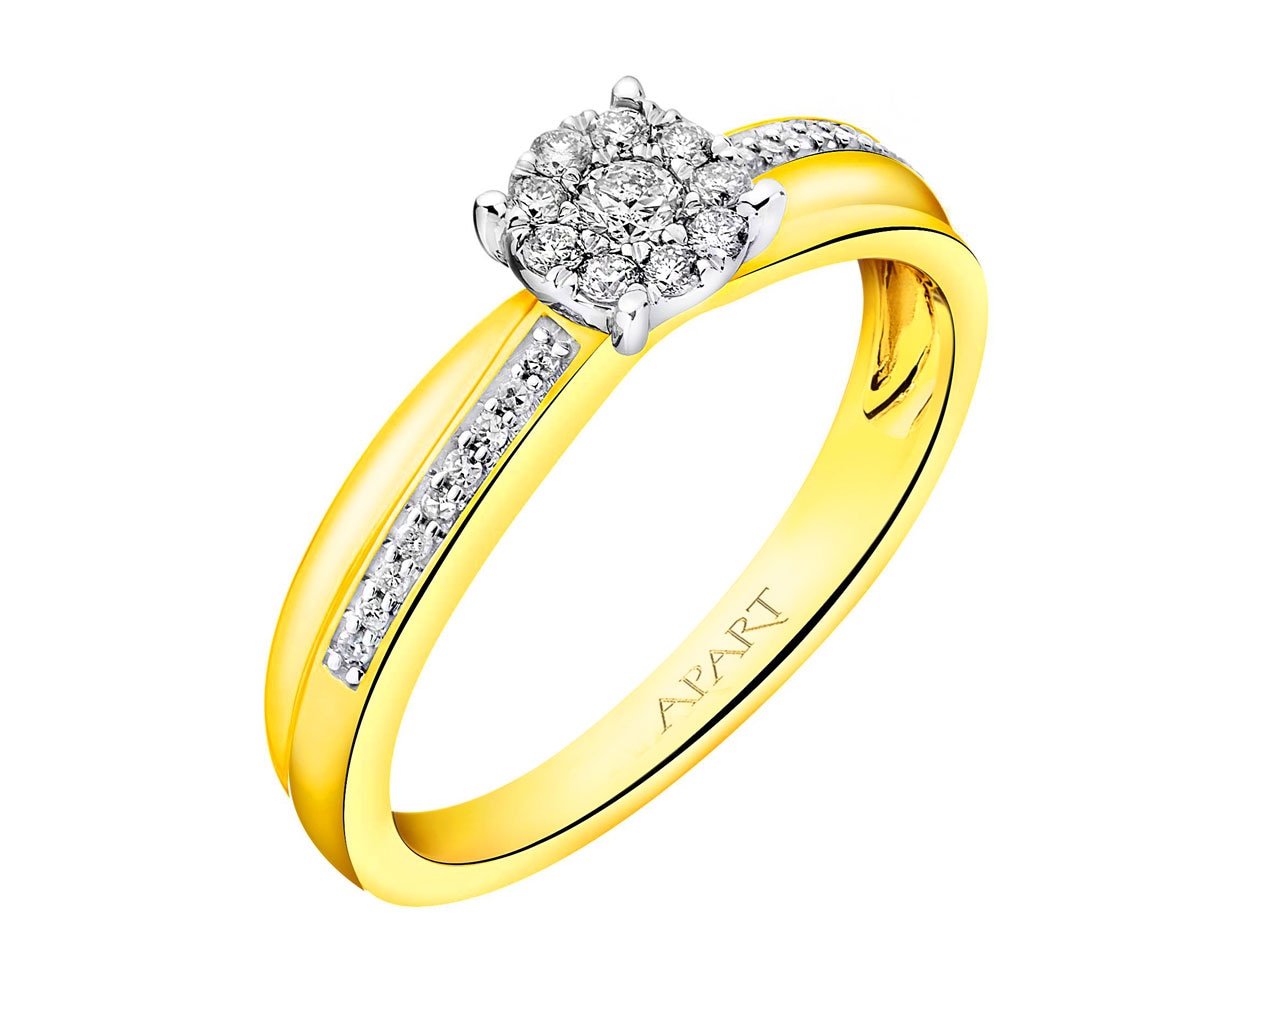 Zlatý prsten s diamanty  0,20 ct - ryzost 585